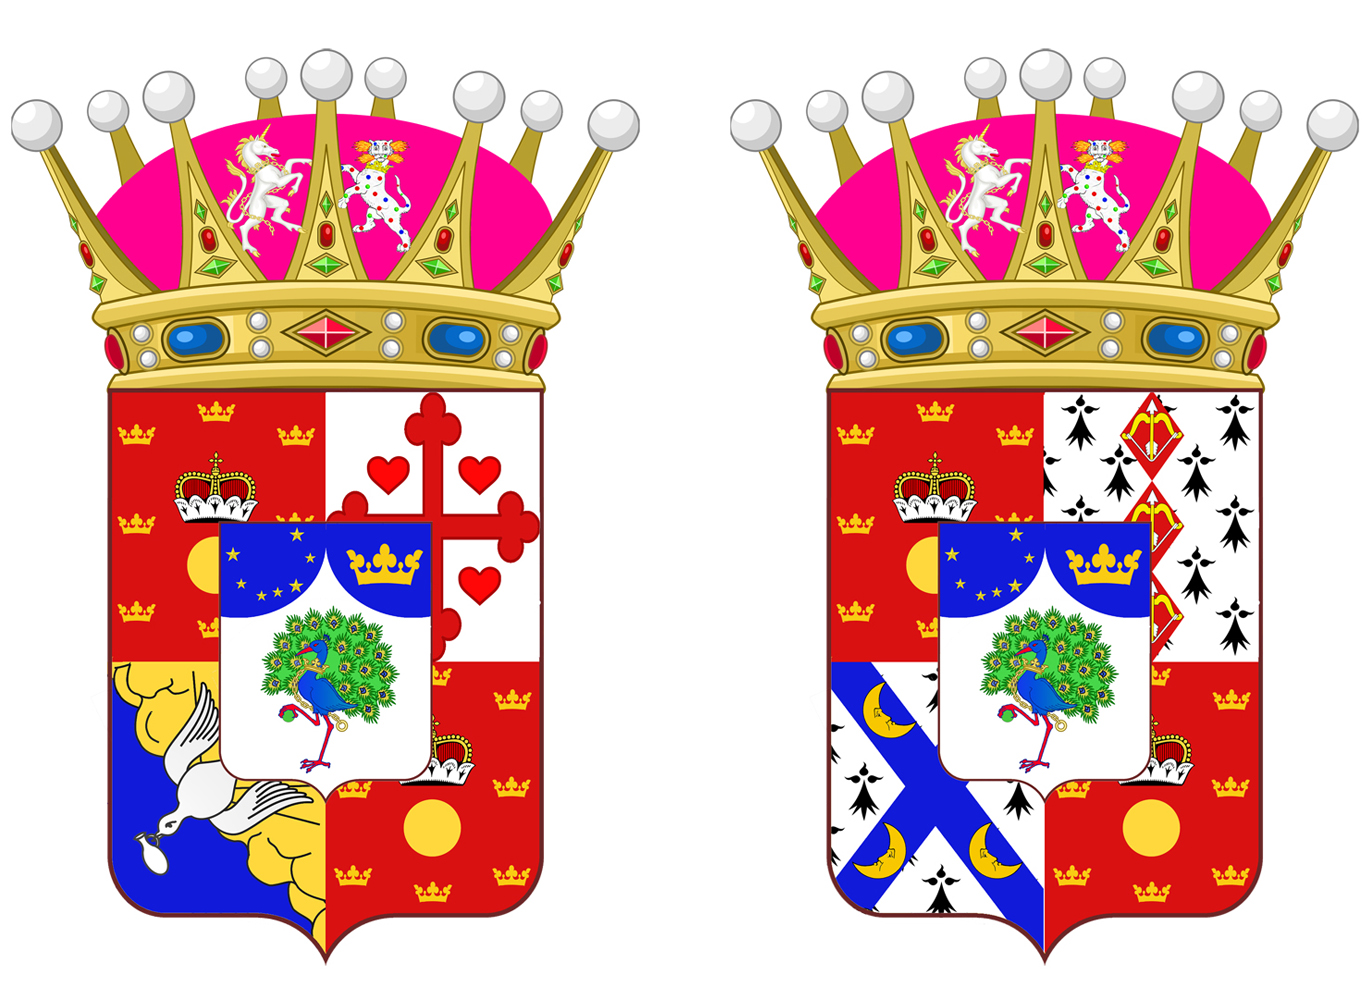 Micronational heraldry, Their Serene Highnesses Prinsess Pia and Princess Åsa